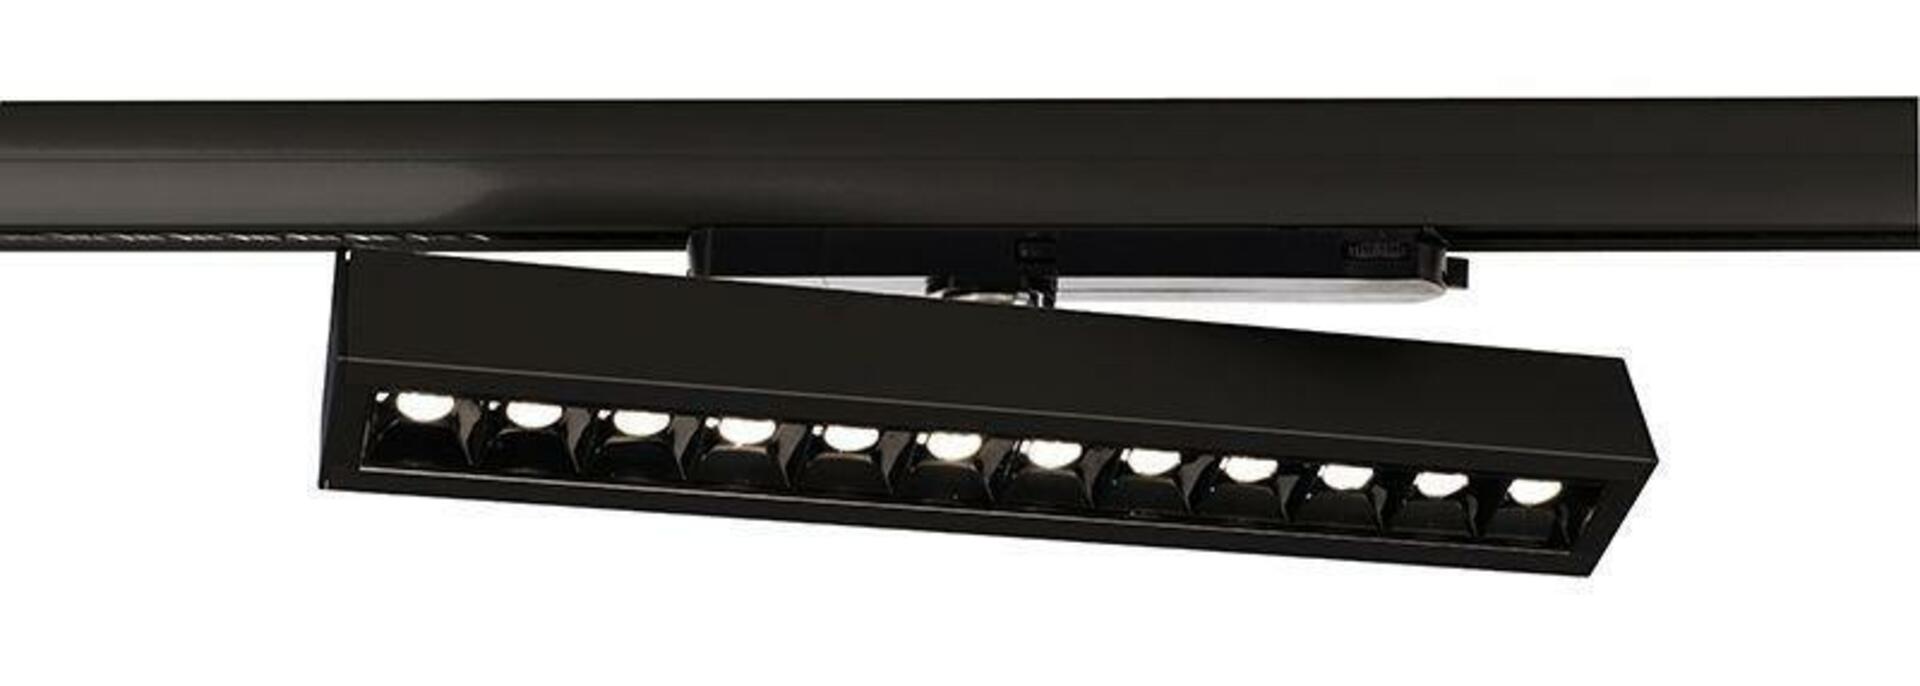 Light Impressions Deko-Light kolejnicový systém 3-fázový 230V Alnitak 25-34W, 3000K 220-240V AC/50-60Hz 34,00 W 3000 K černá 336 mm 707114